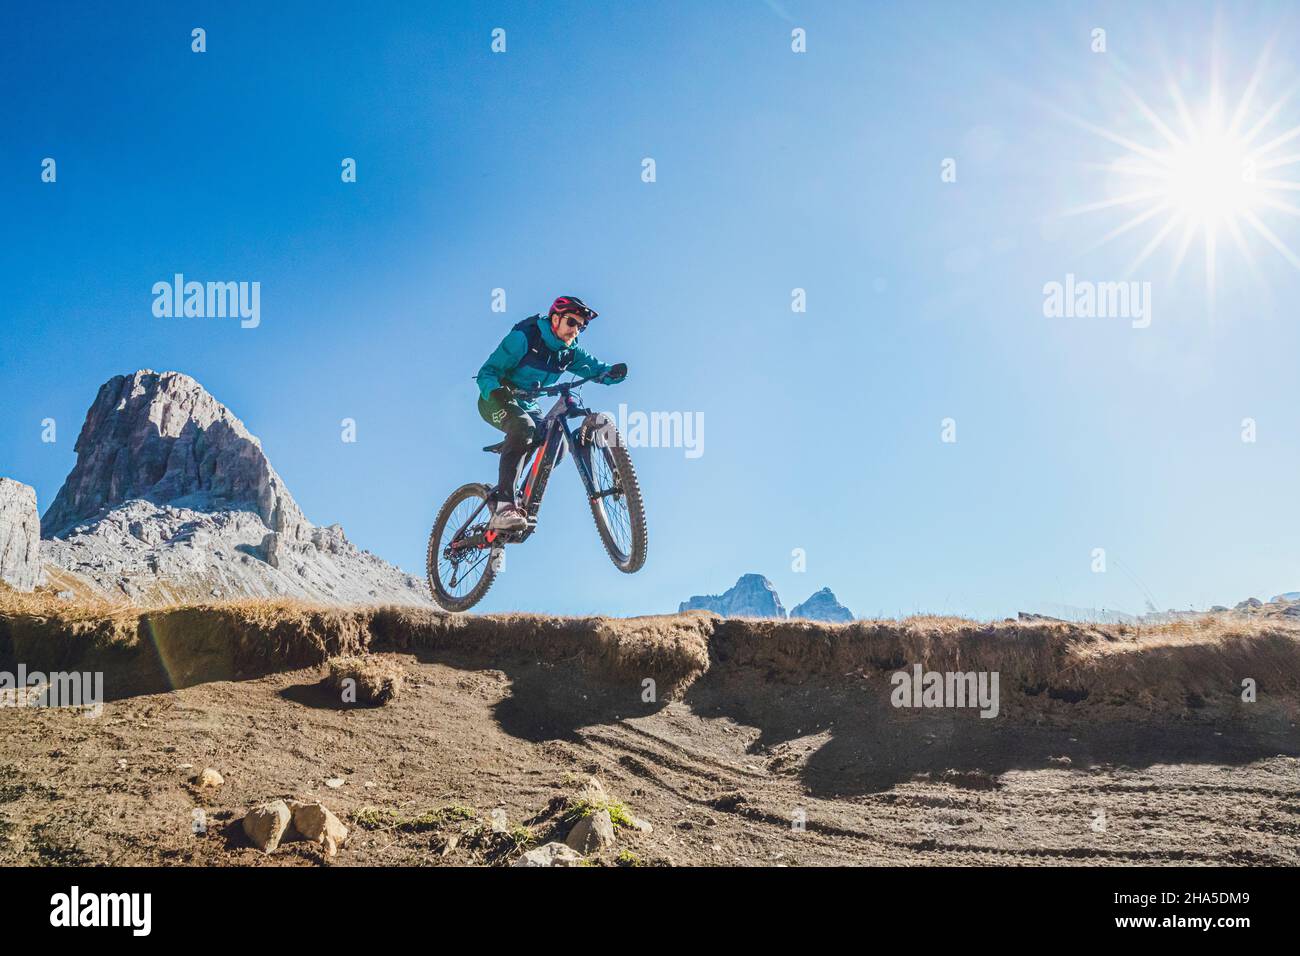 E-Biker in Aktion springt mit seinem Fahrrad, Herbstlandschaft, dolomiten, san vito di cadore, belluno, veneto, italien Stockfoto